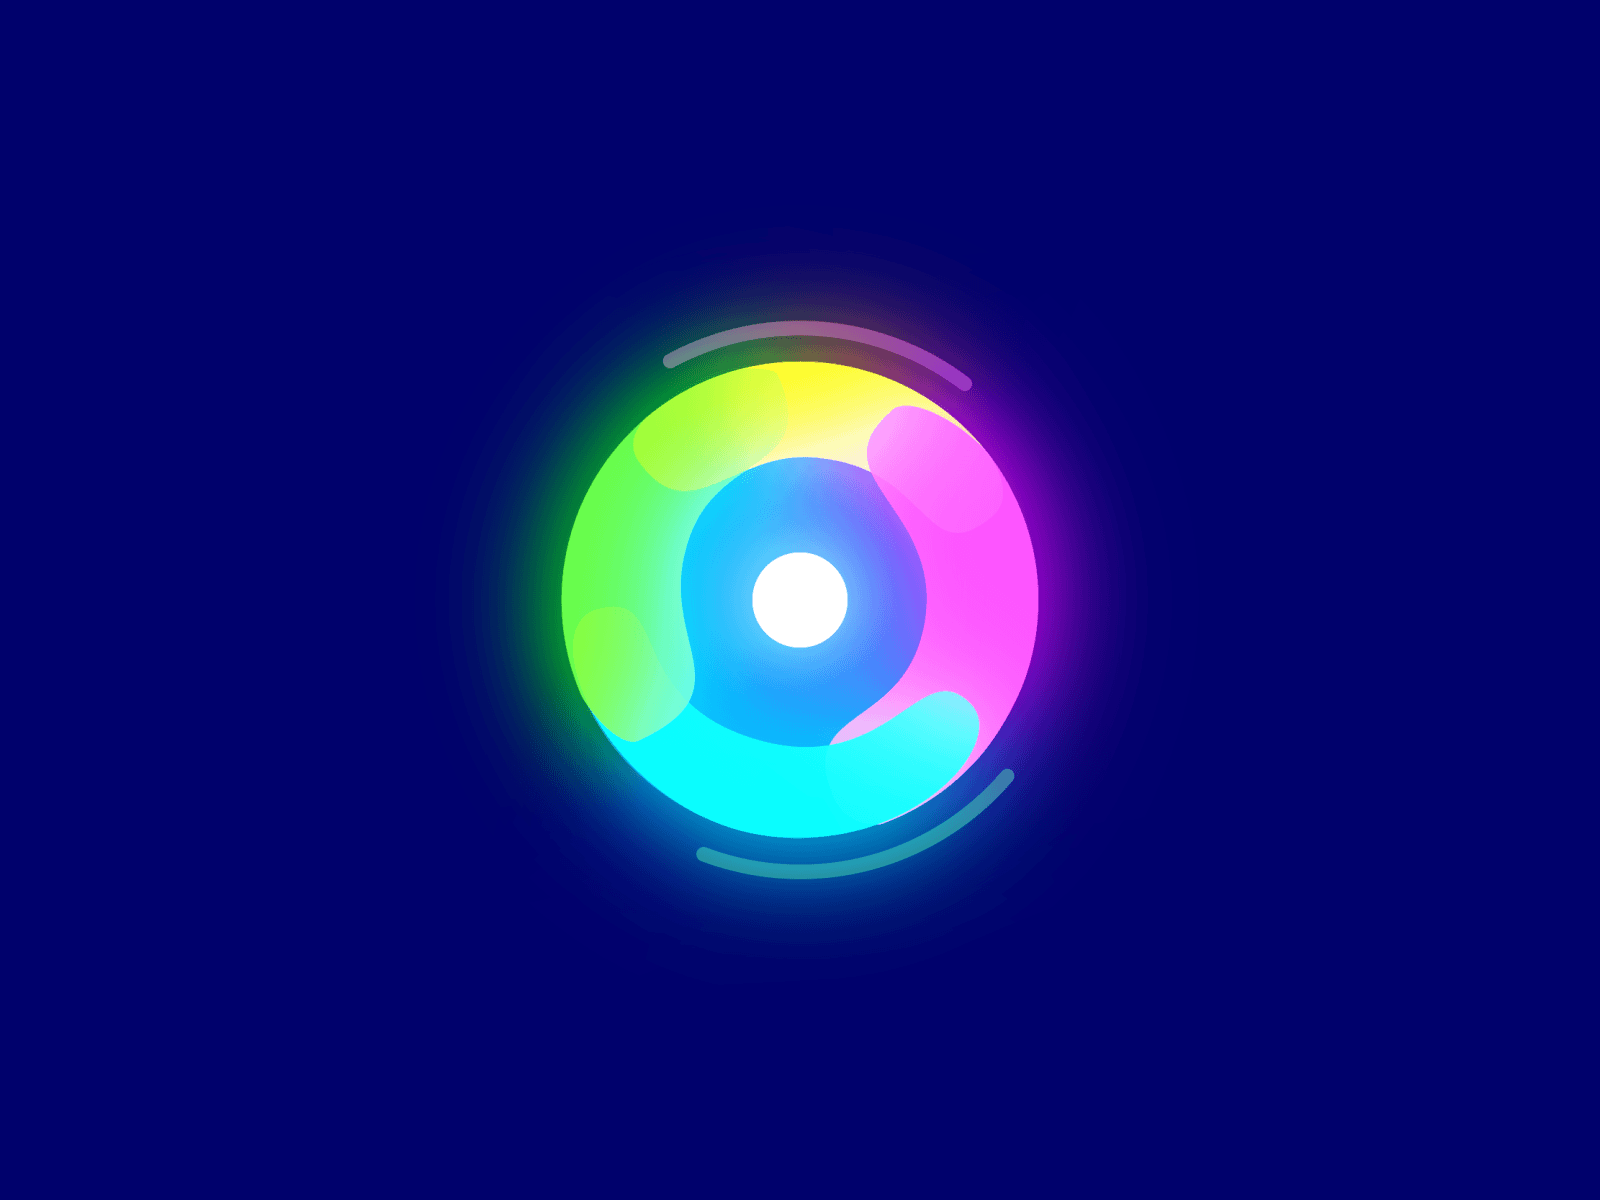 Circles - Logo Animation by Alex Gorbunov for Alex Go & Co on Dribbble